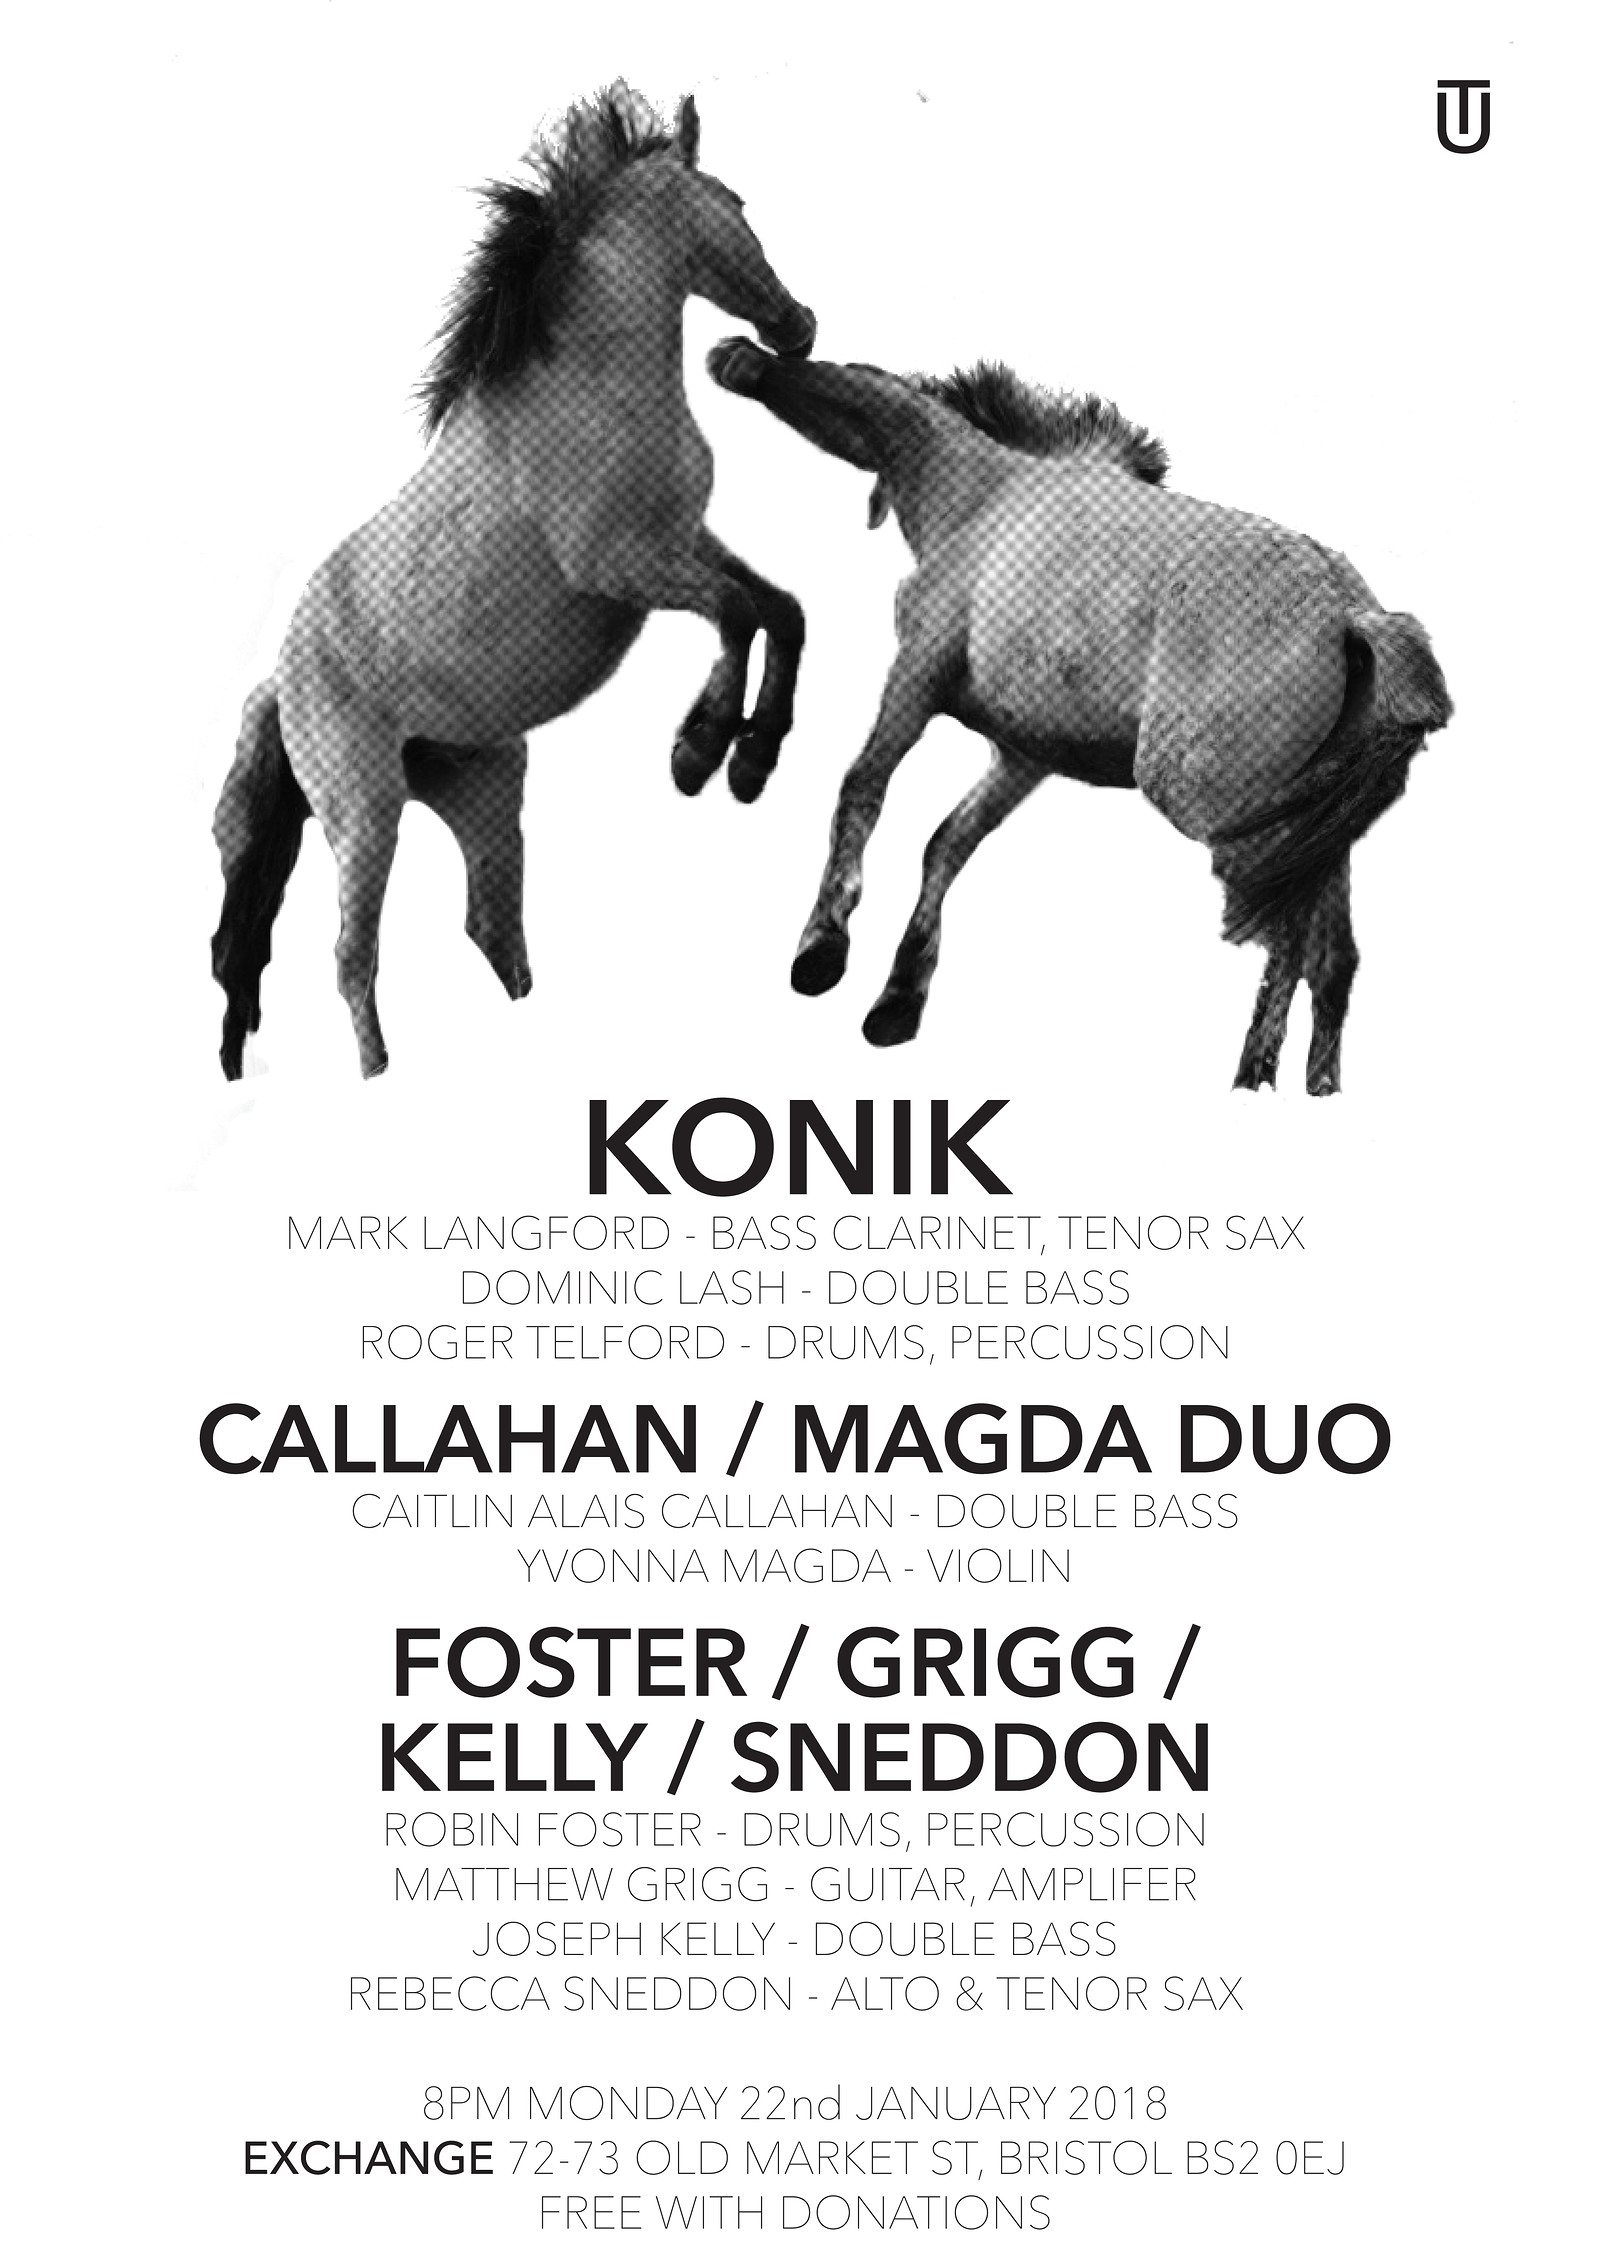 Konik, Callahan/Magda, Foster/Grigg/Kelly/Sneddon at Exchange